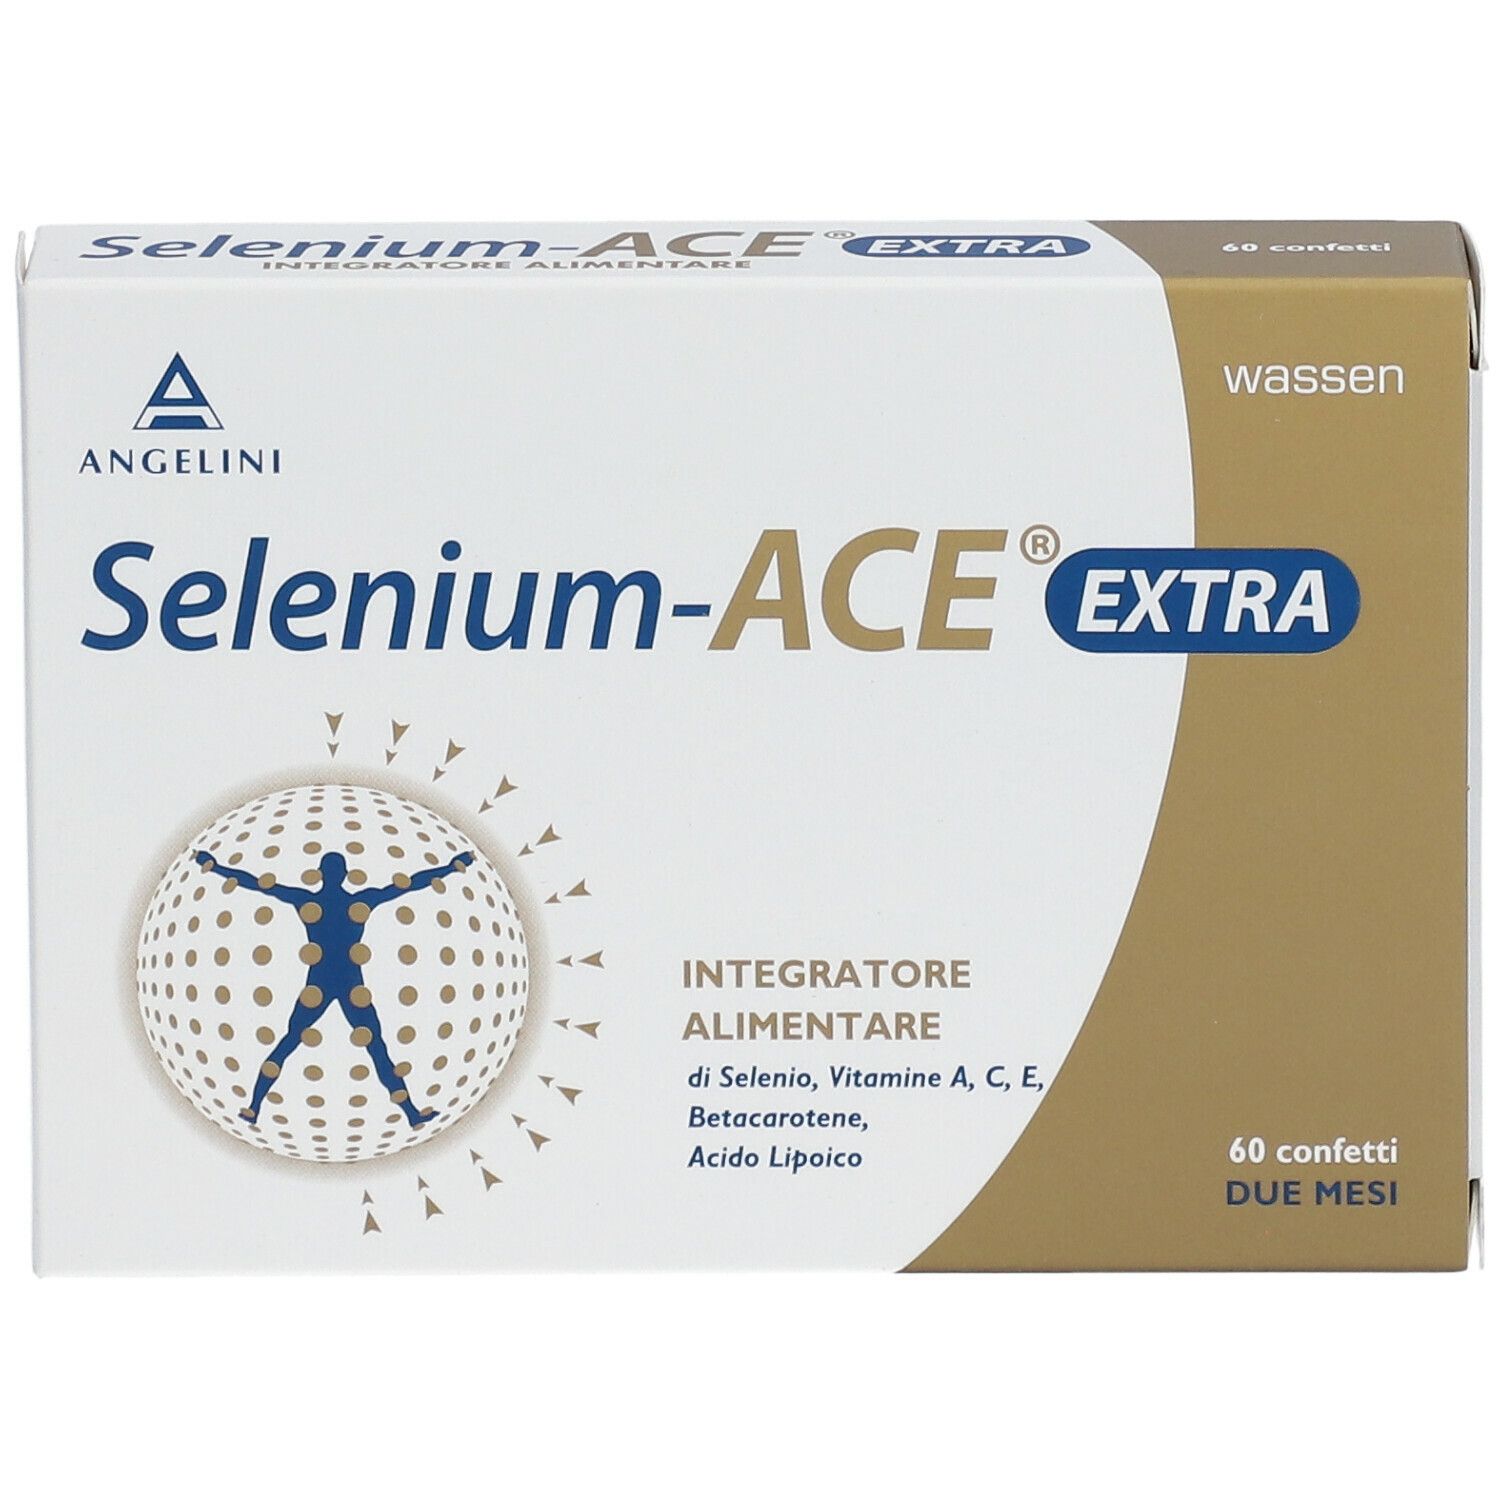 Angelini Selenium-ACE® Extra 60 confetti